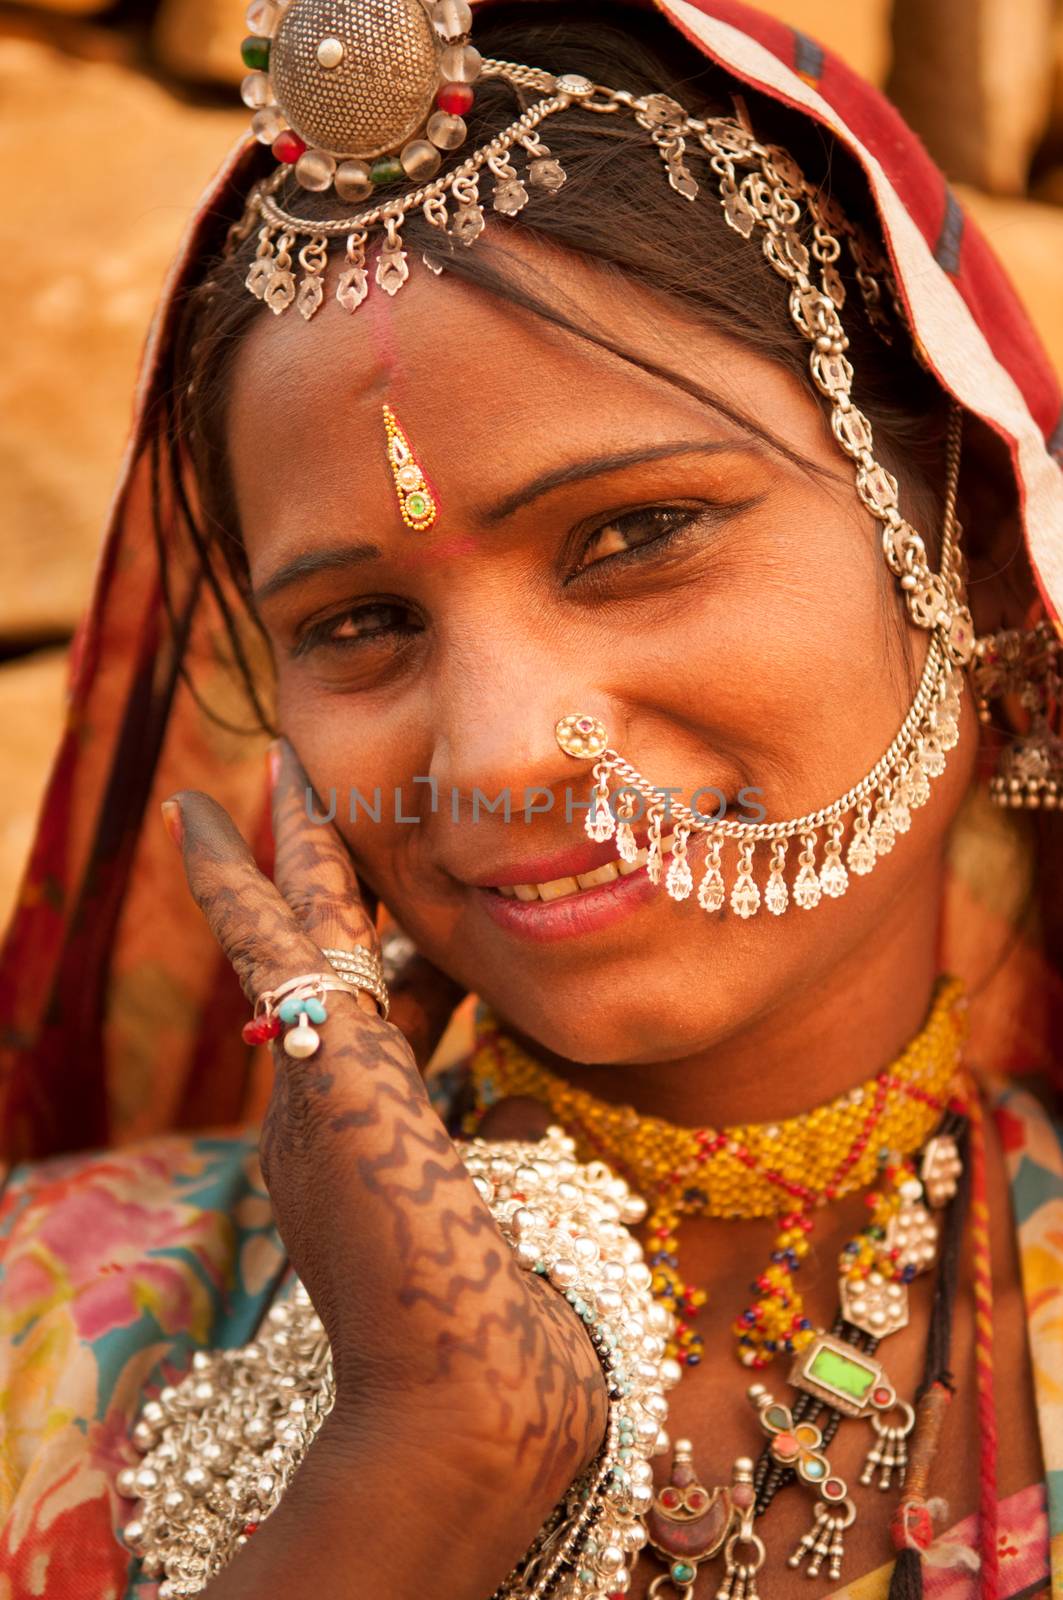 Beautiful Traditional Indian woman in sari dress smiling, India people.